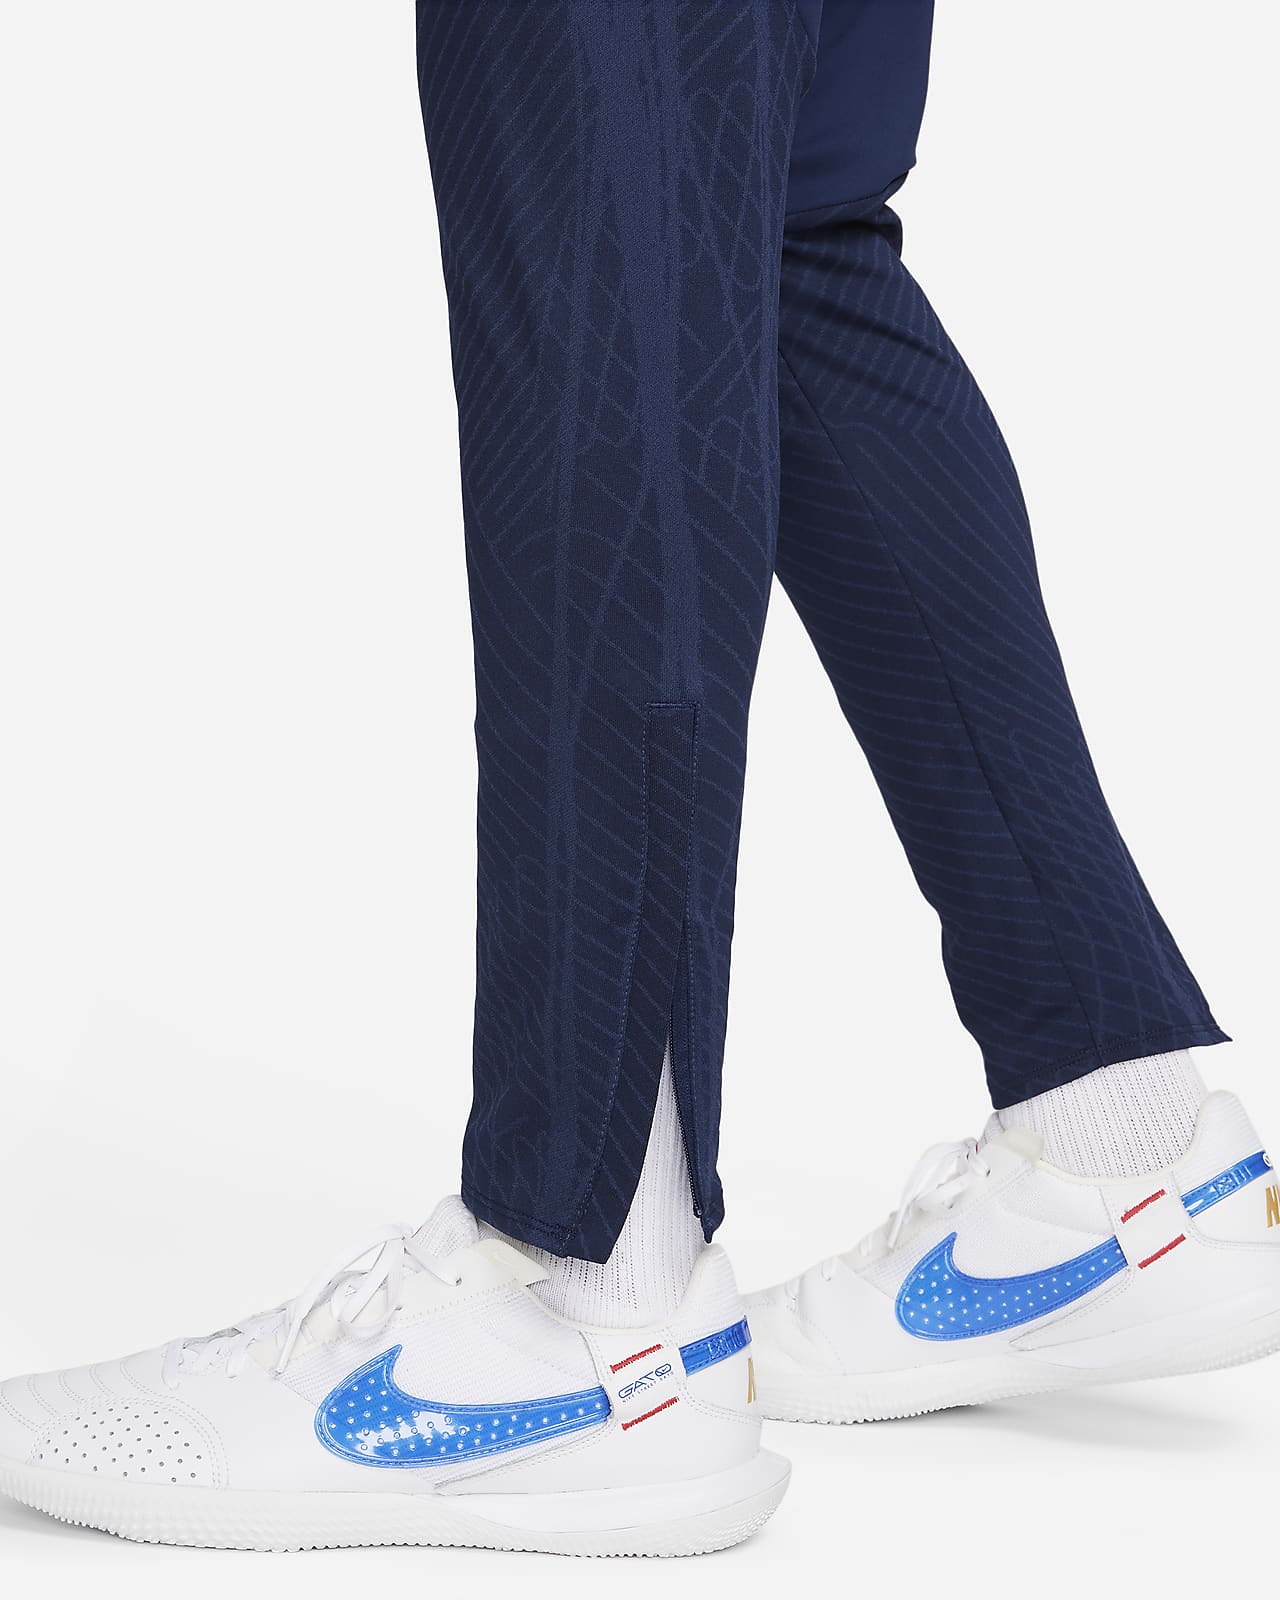 Nike Track Pants 1013